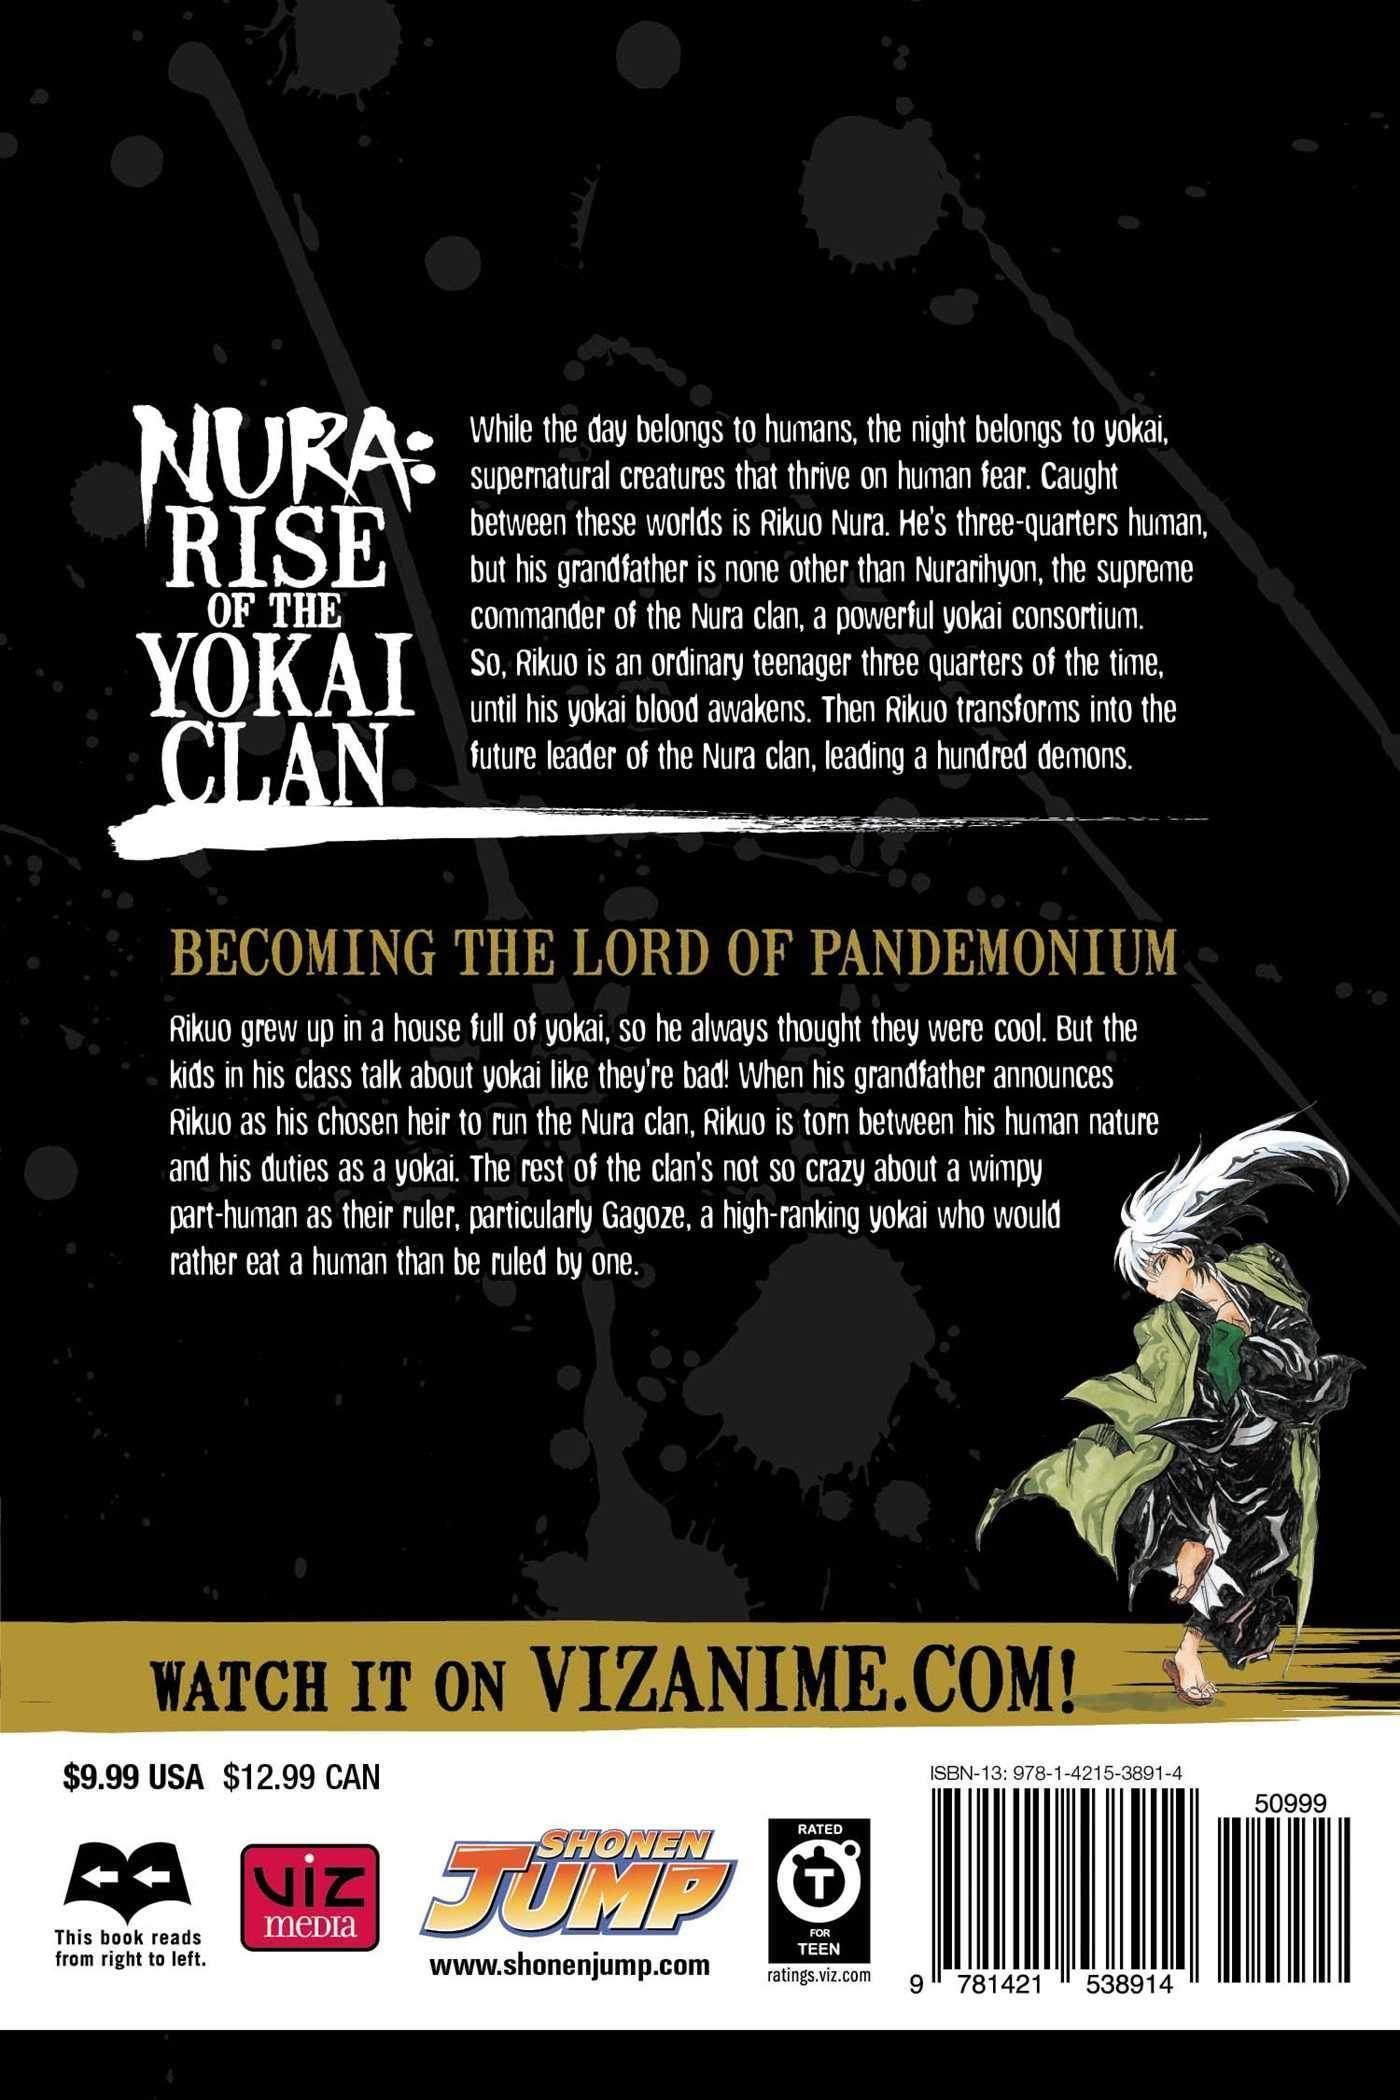 Nura: Rise of the Yokai Clan (Manga) Vol. 1 - Tankobonbon